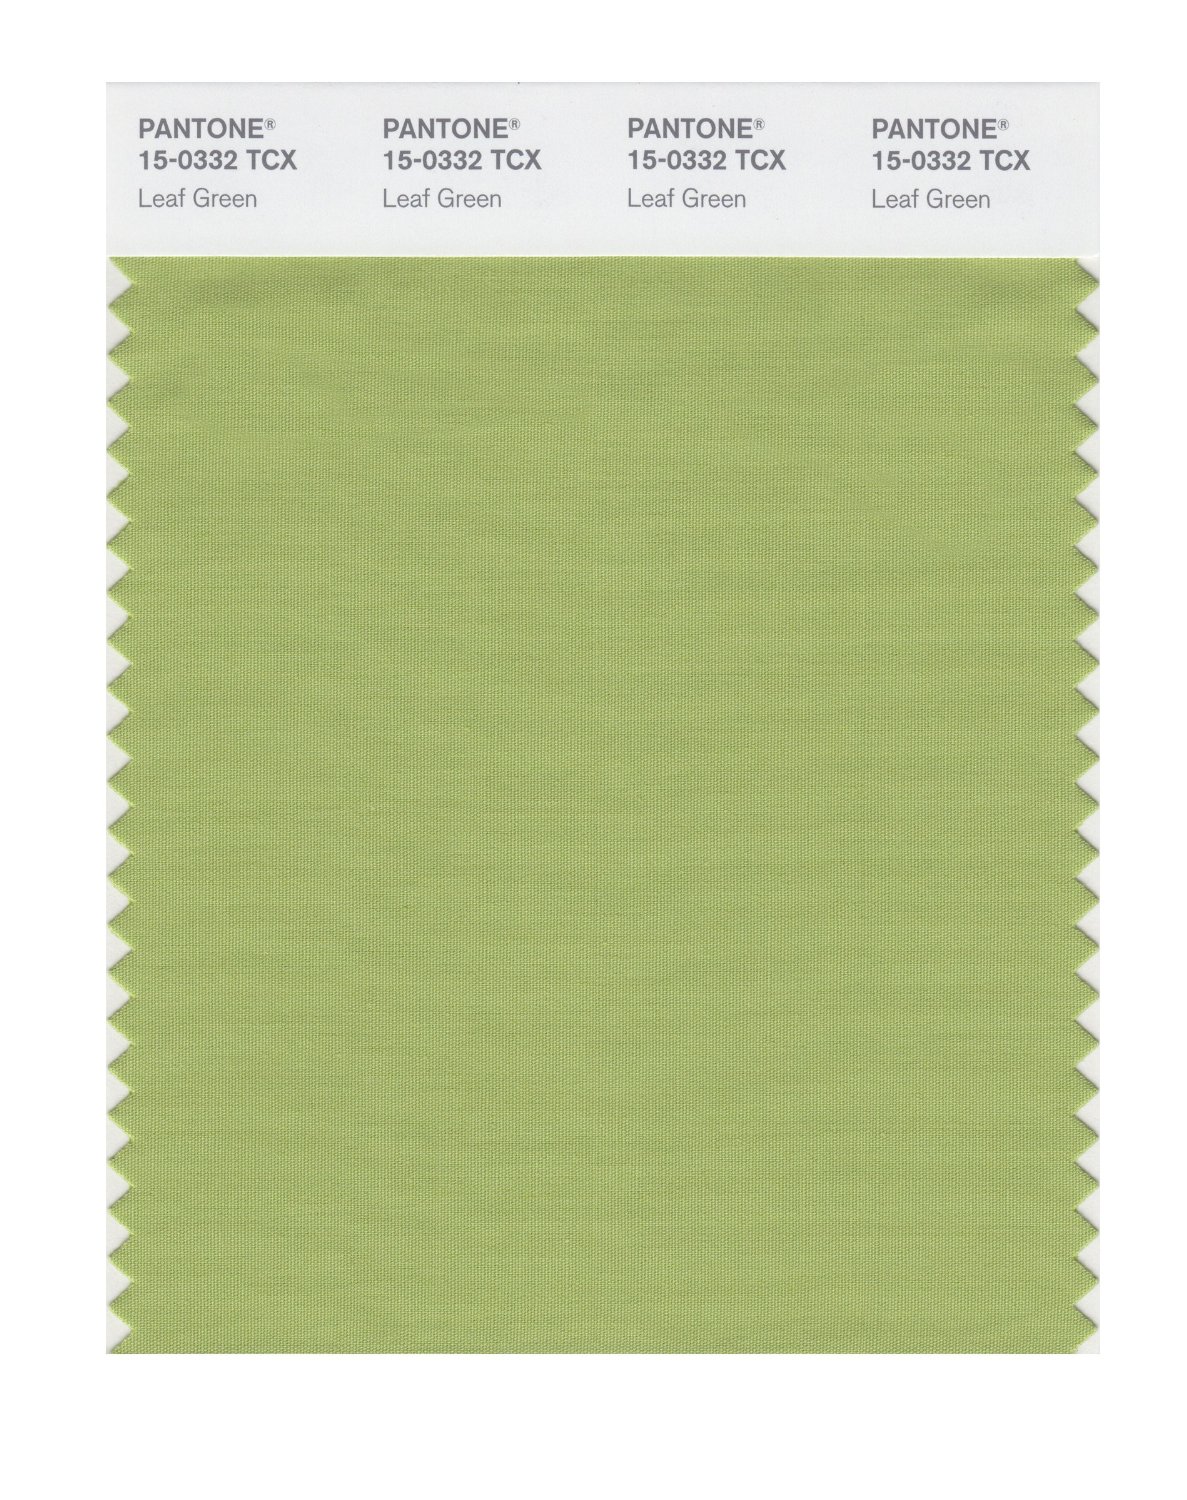 Pantone Cotton Swatch 15-0332 Leaf Green